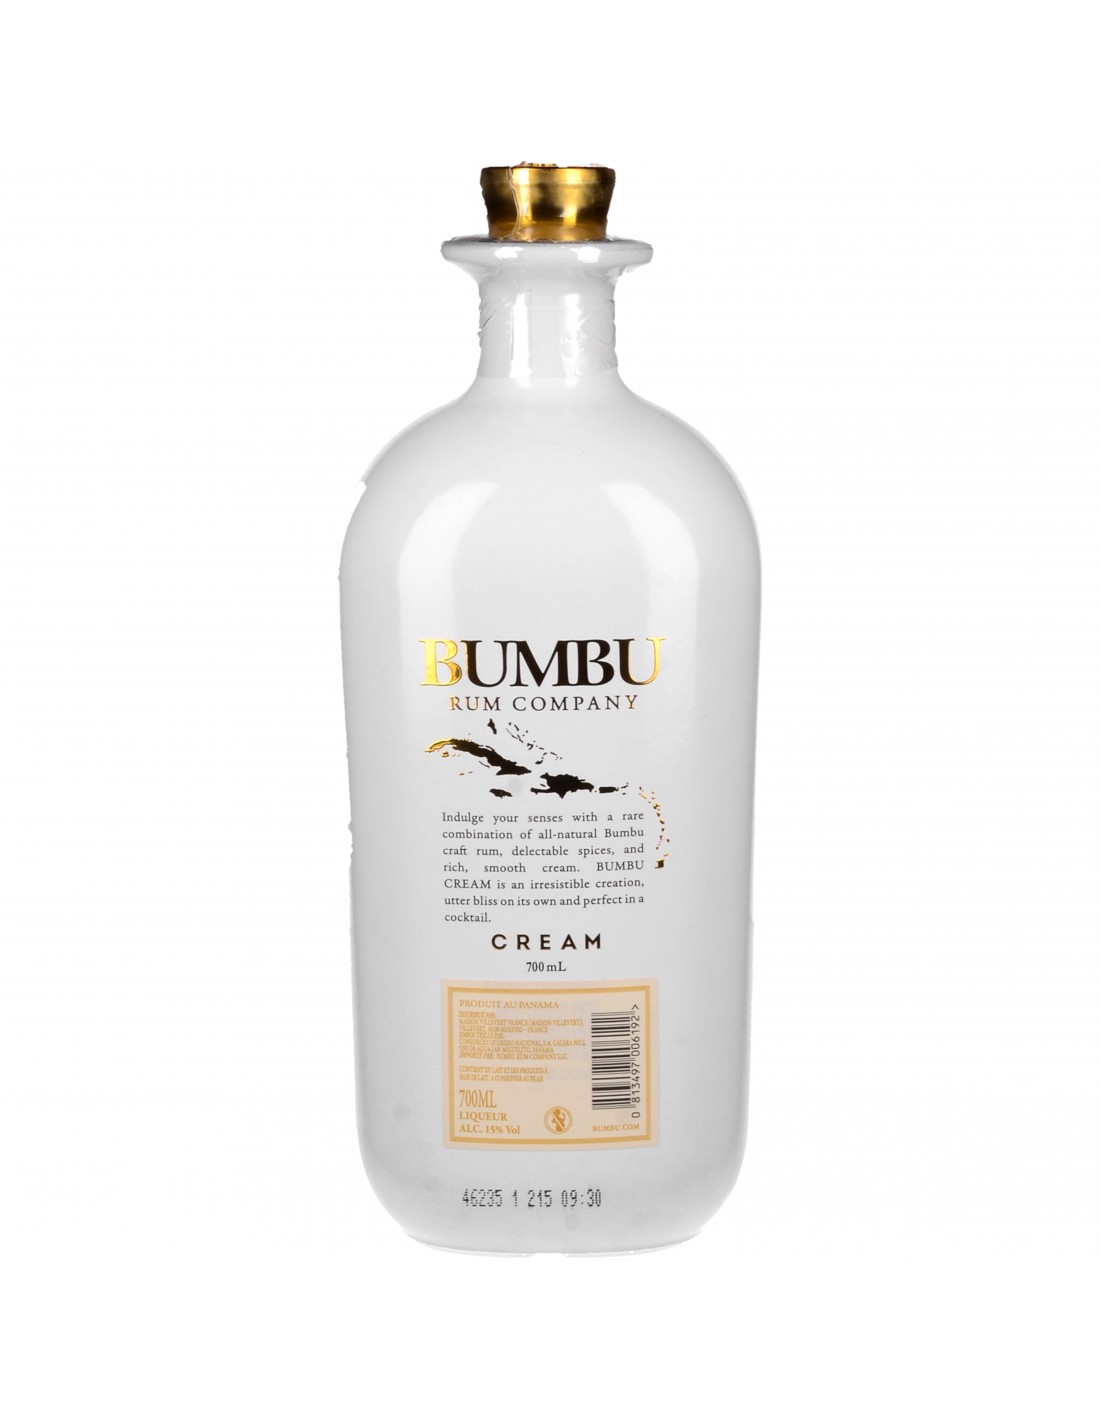 Bumbu Rhum Xo Rum 40° Tube - Bumbu - Rhum ambré Rhums & Cachaças  Spiritueux - XO-Vin